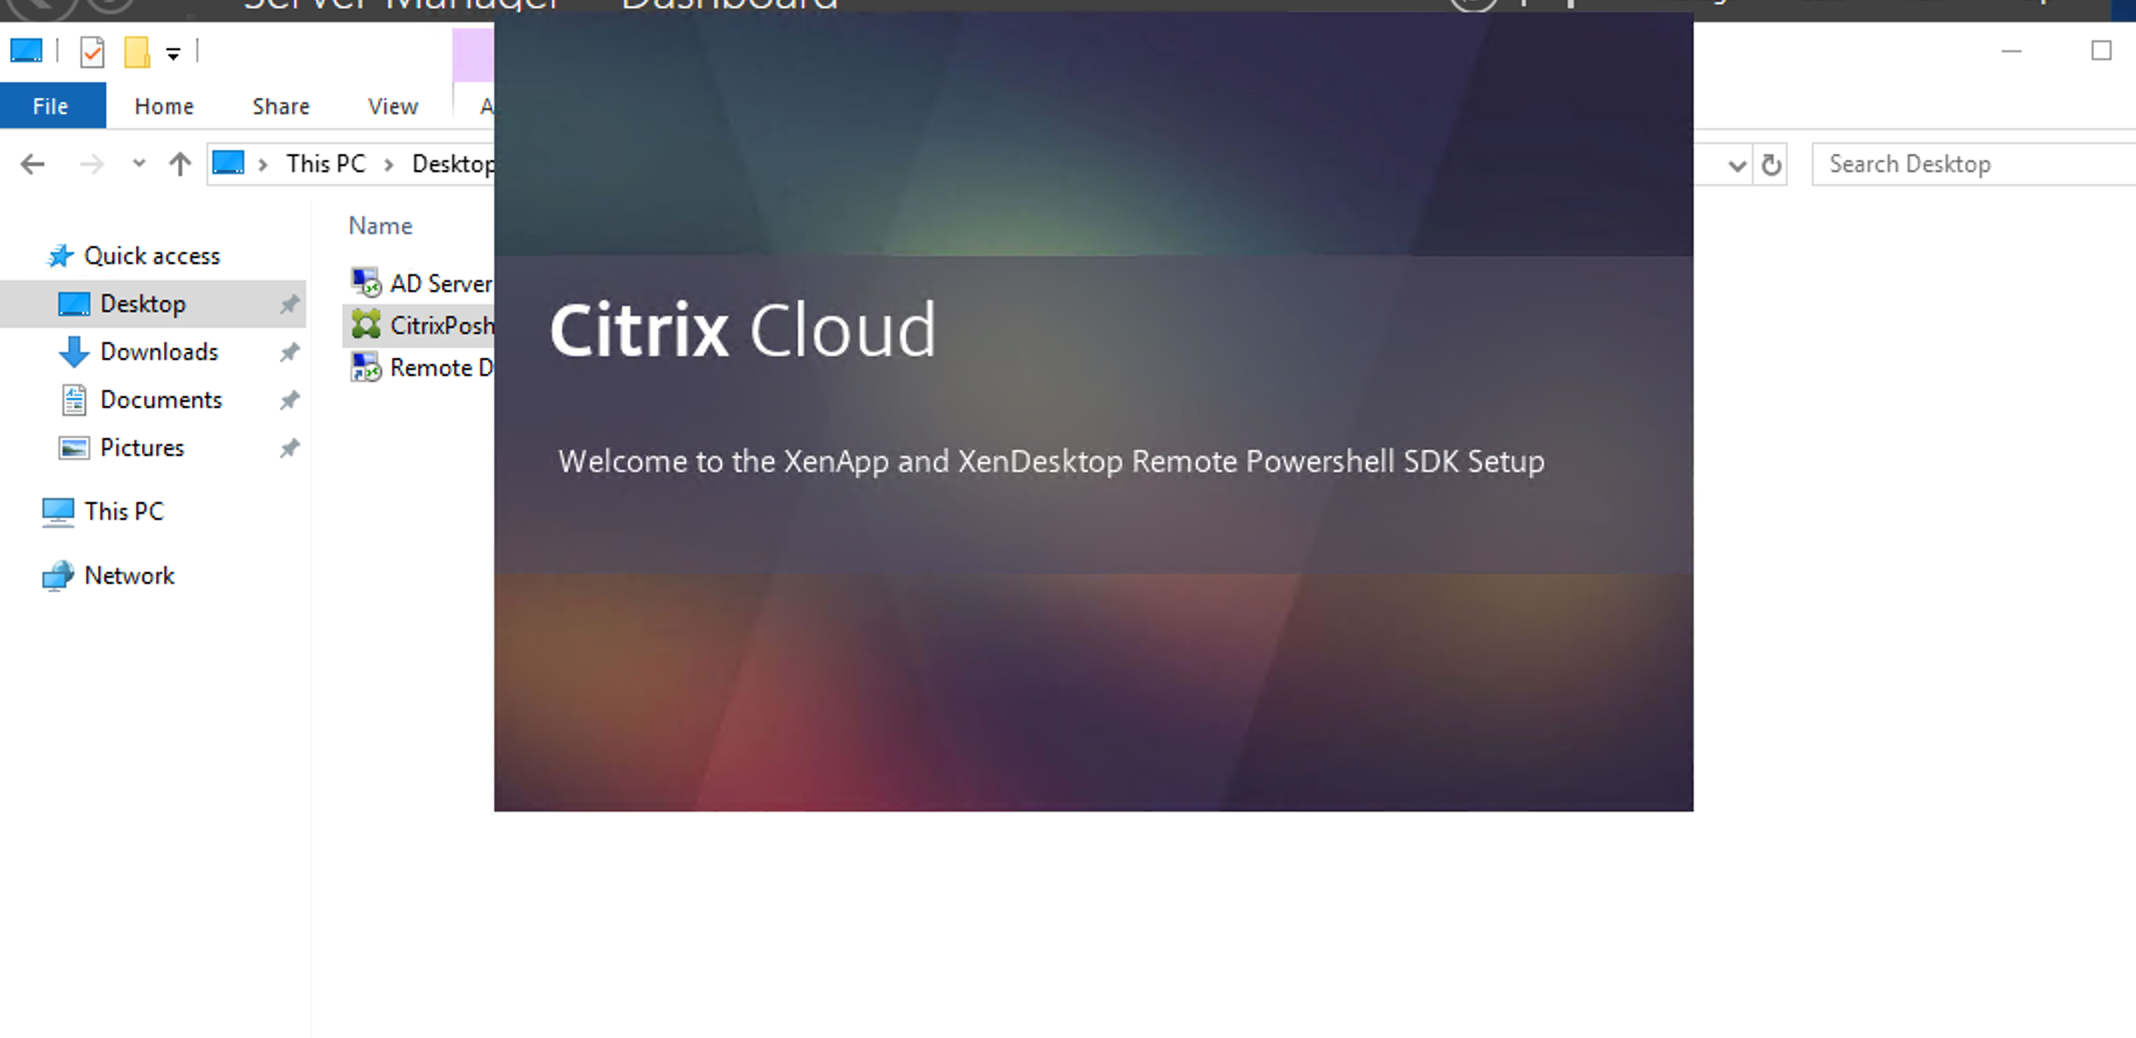 citrix virtual apps and desktops remote powershell sdk